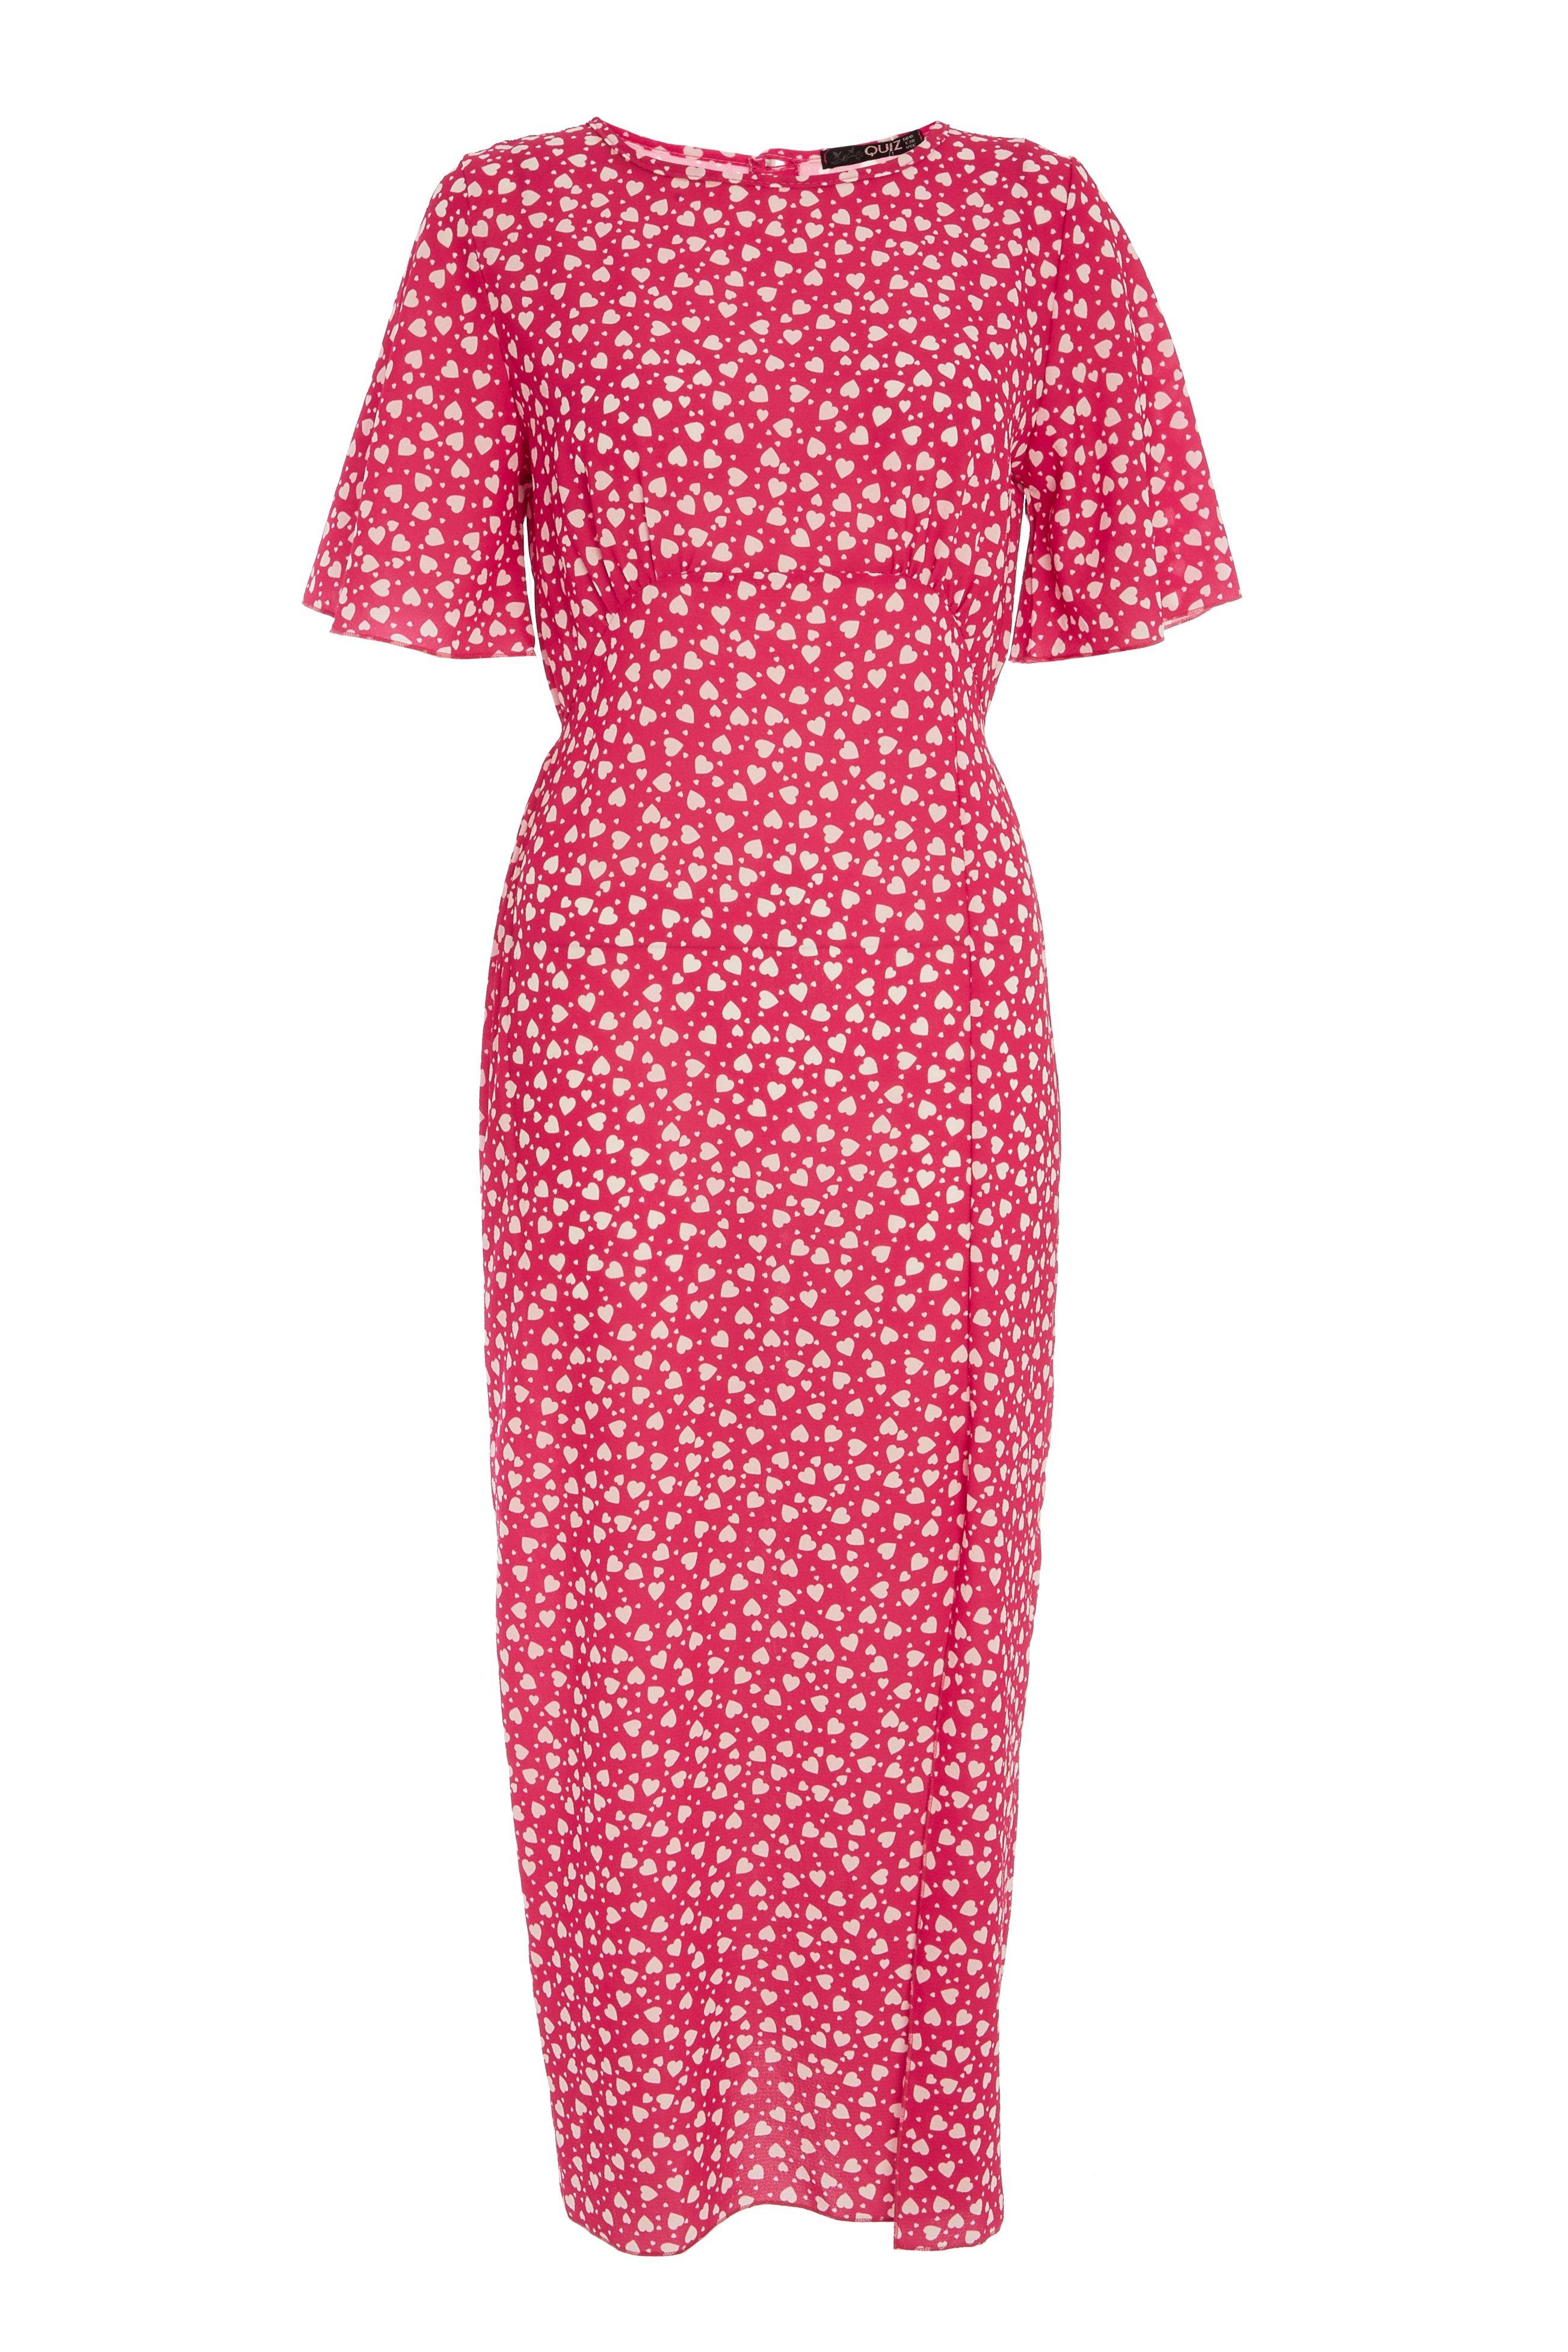 Pink Heart Print Midi Dress - Quiz Clothing